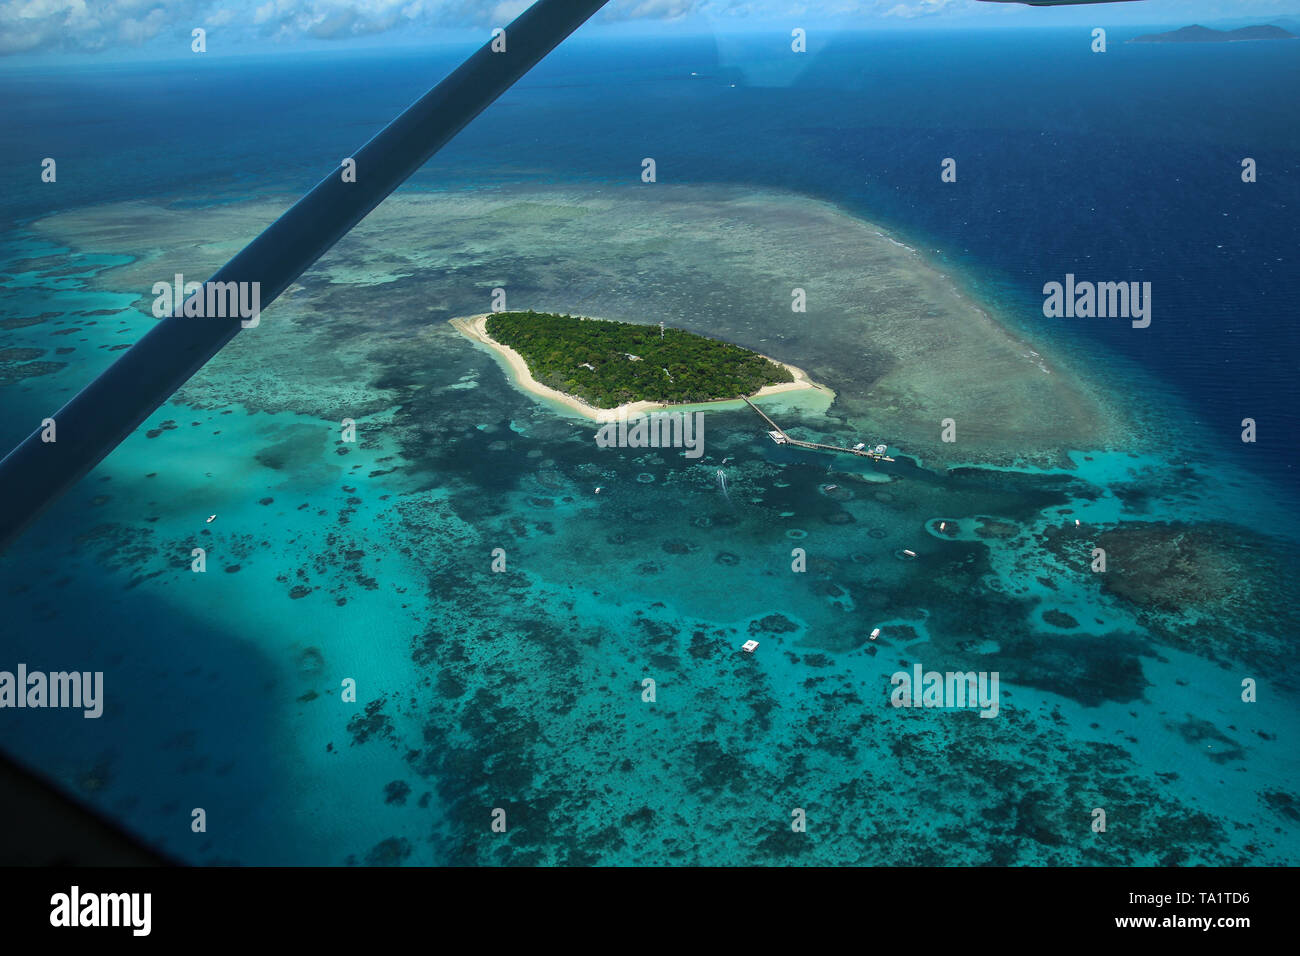 Isla Verde, Isla tropical situada dentro de la Gran Barrera de Coral de Australia Foto de stock